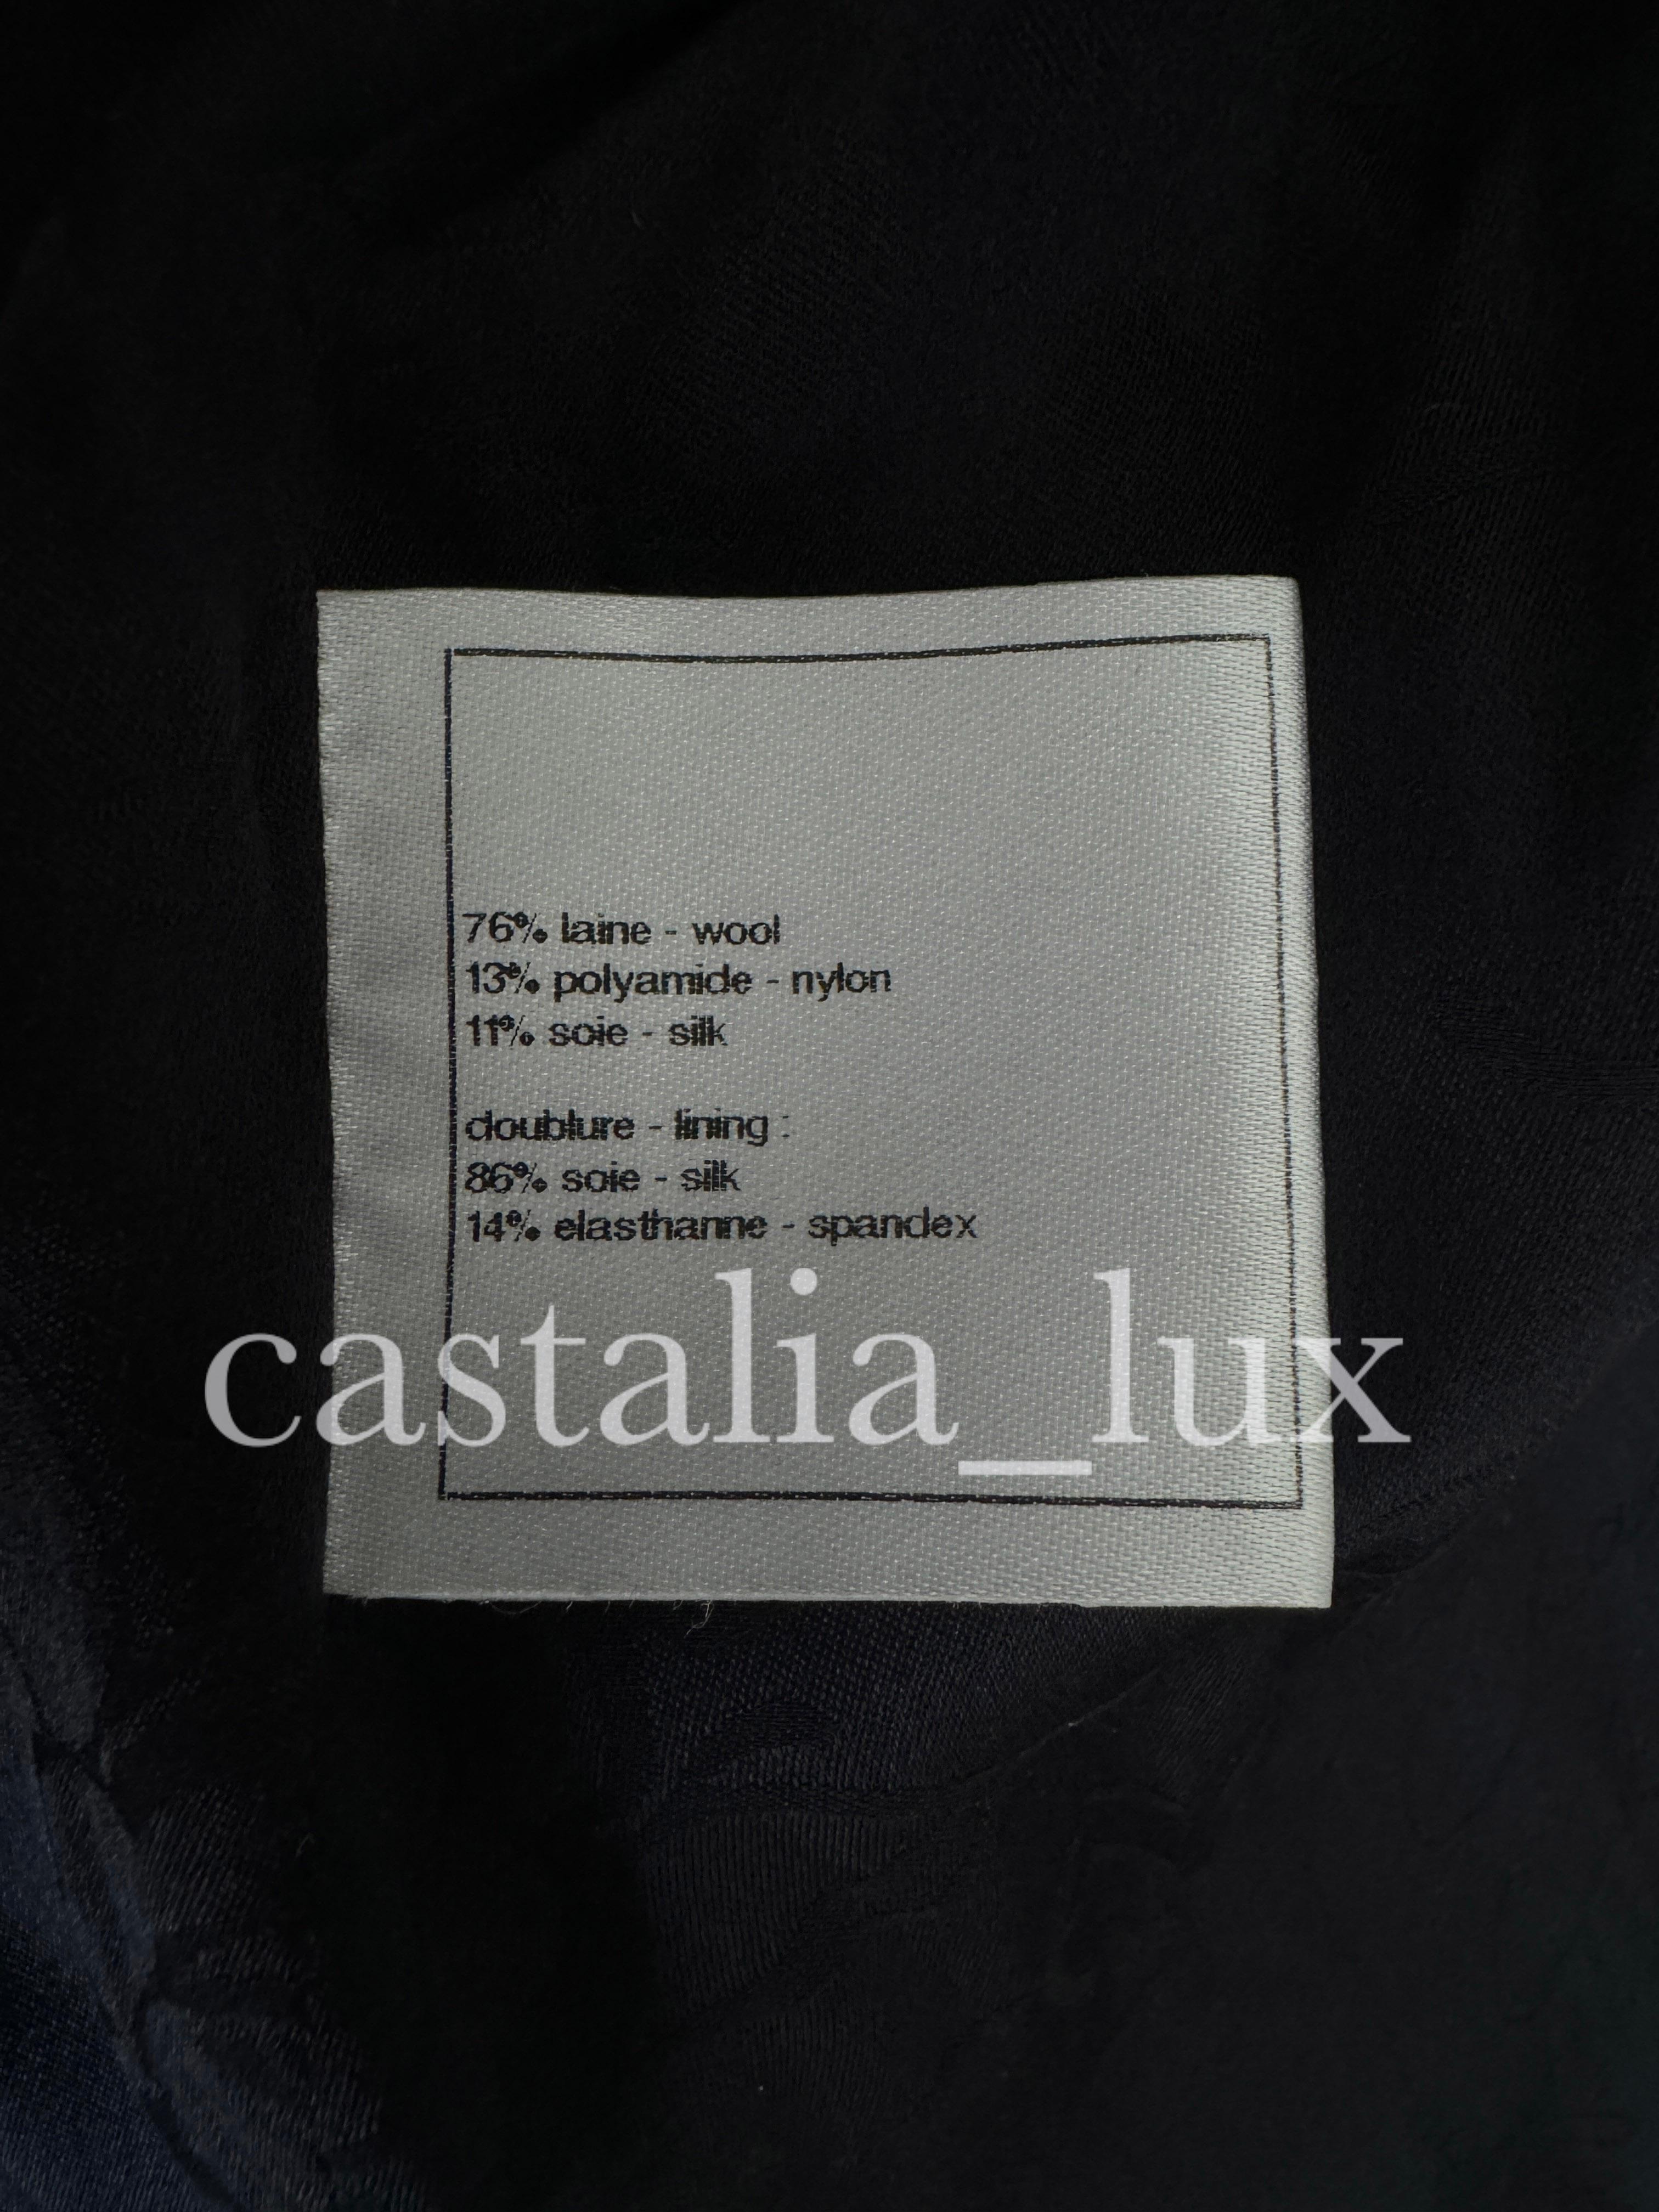 Chanel Iconic Paris / Venice Little Tweed Jacket For Sale 9